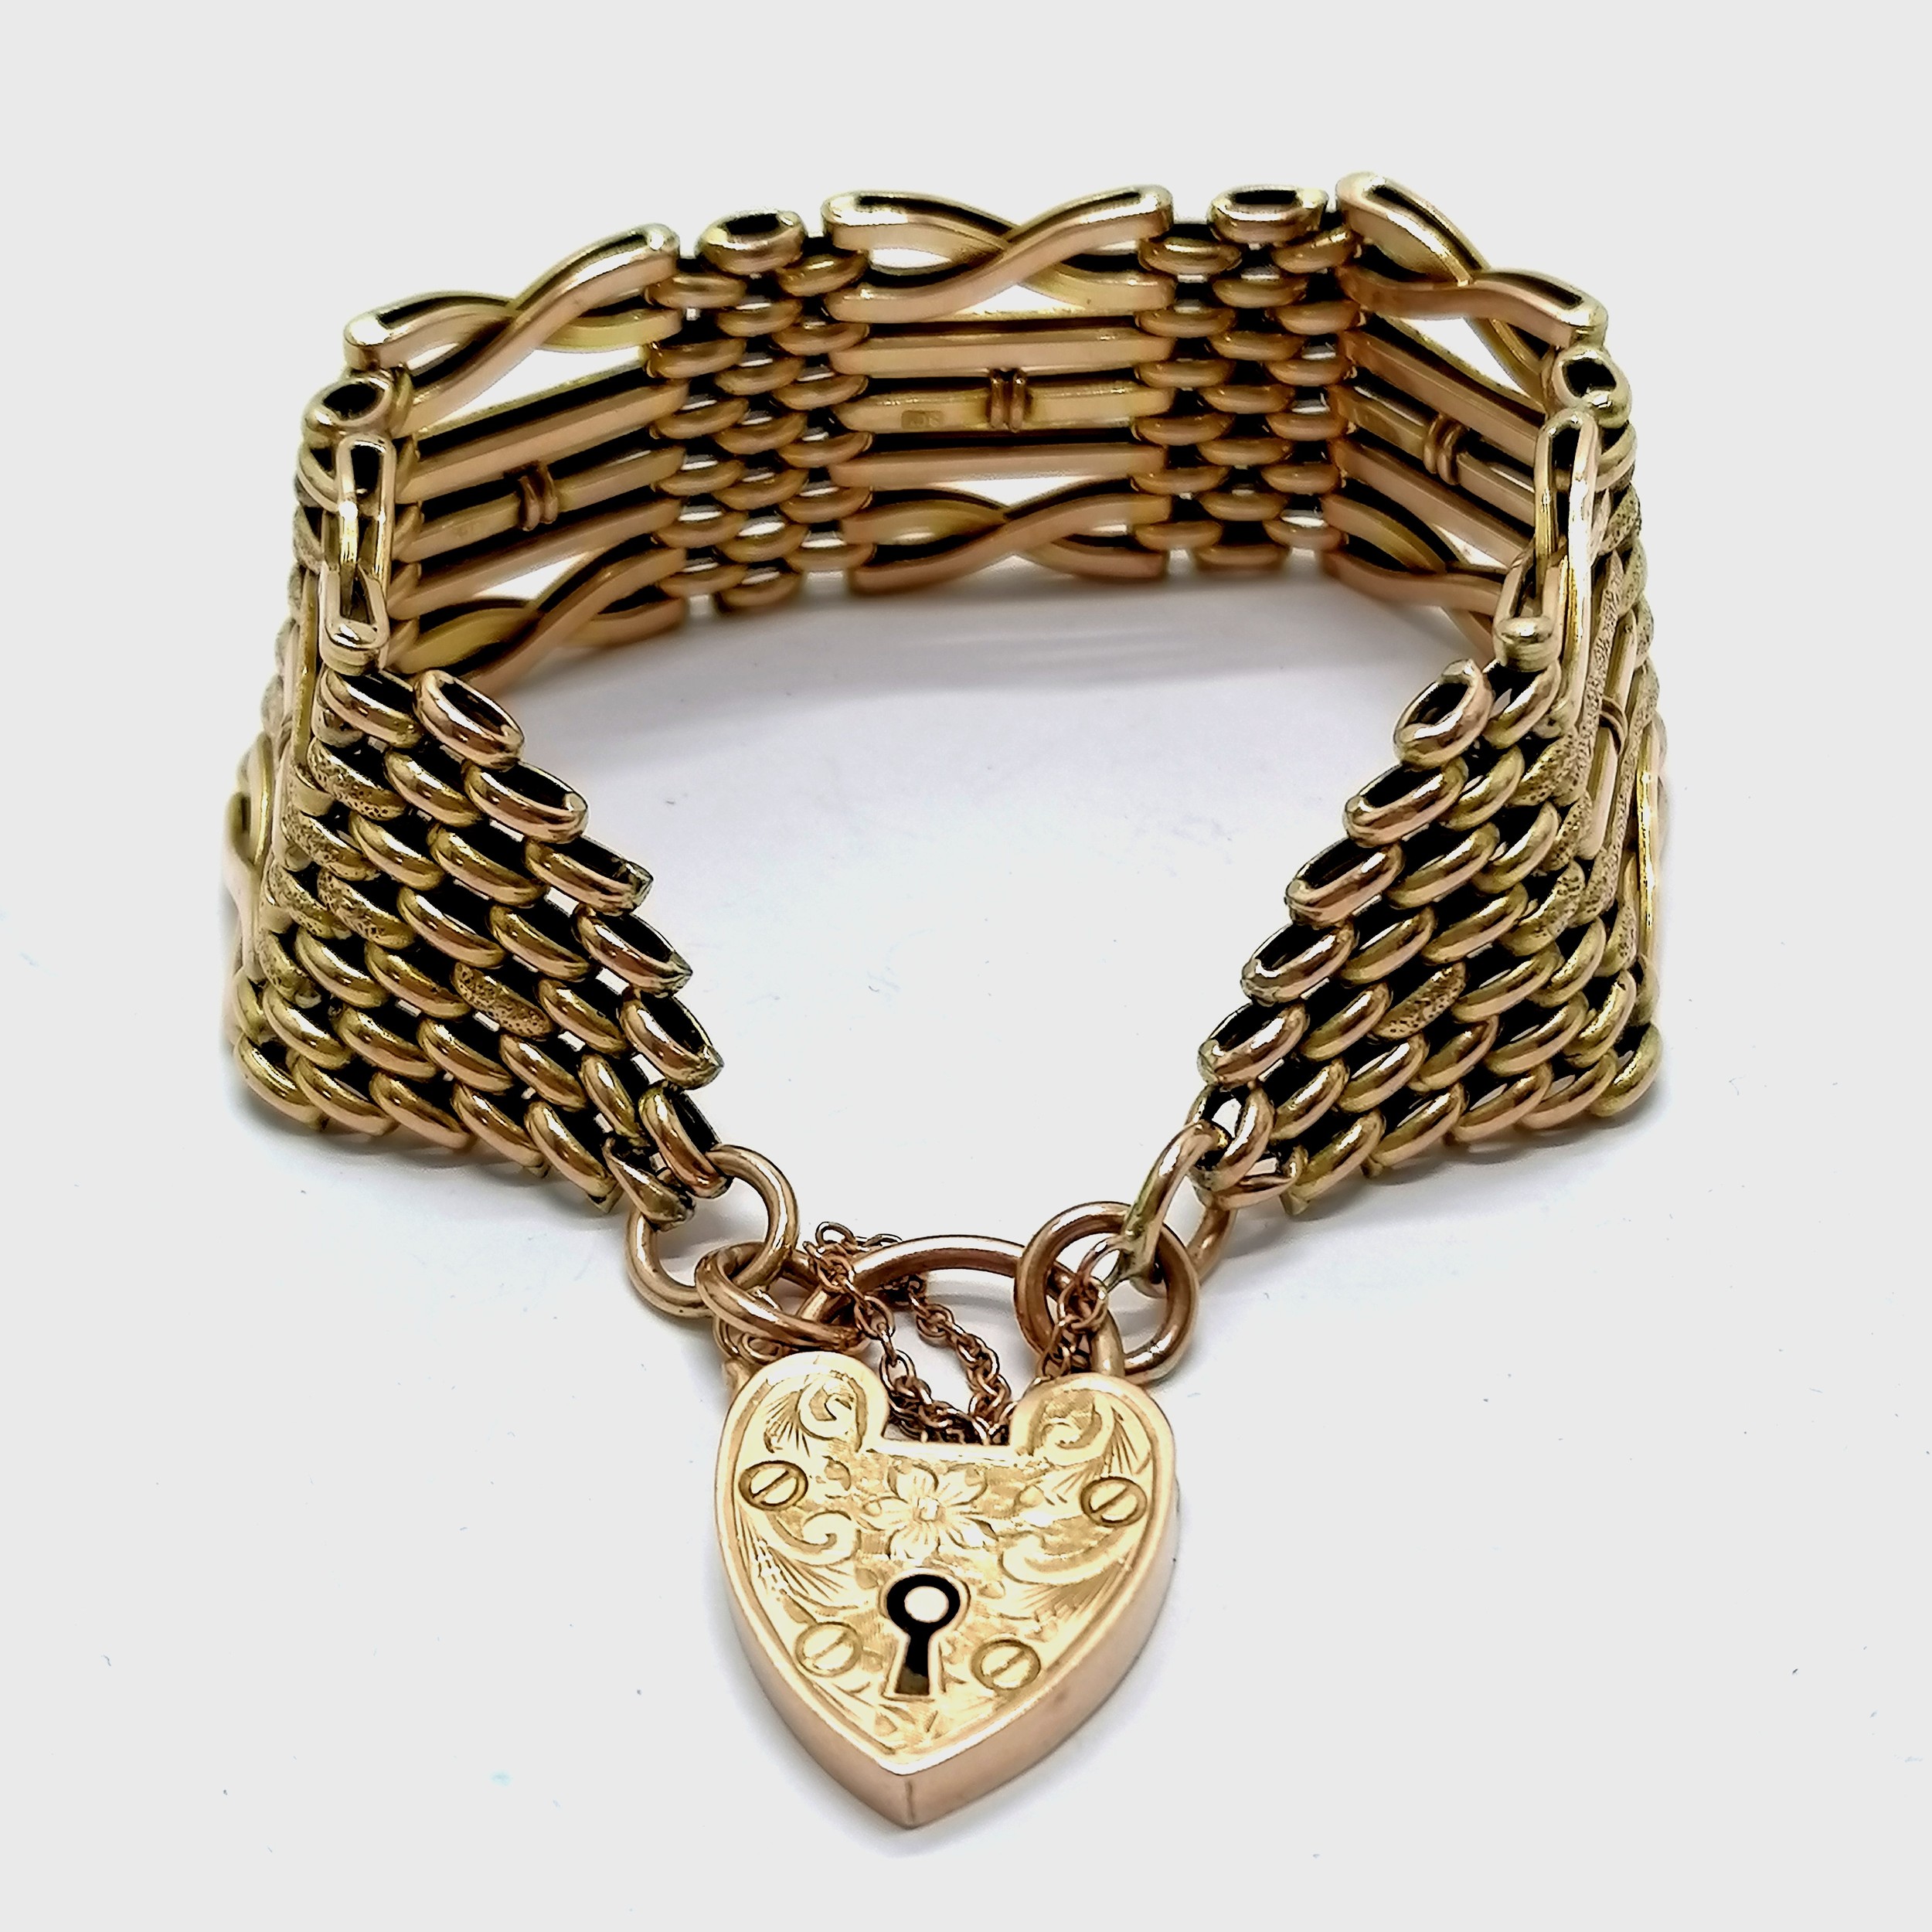 Antique 9ct hallmarked rose gold 7 bar gate link bracelet with fancy links & heart padlock clasp -